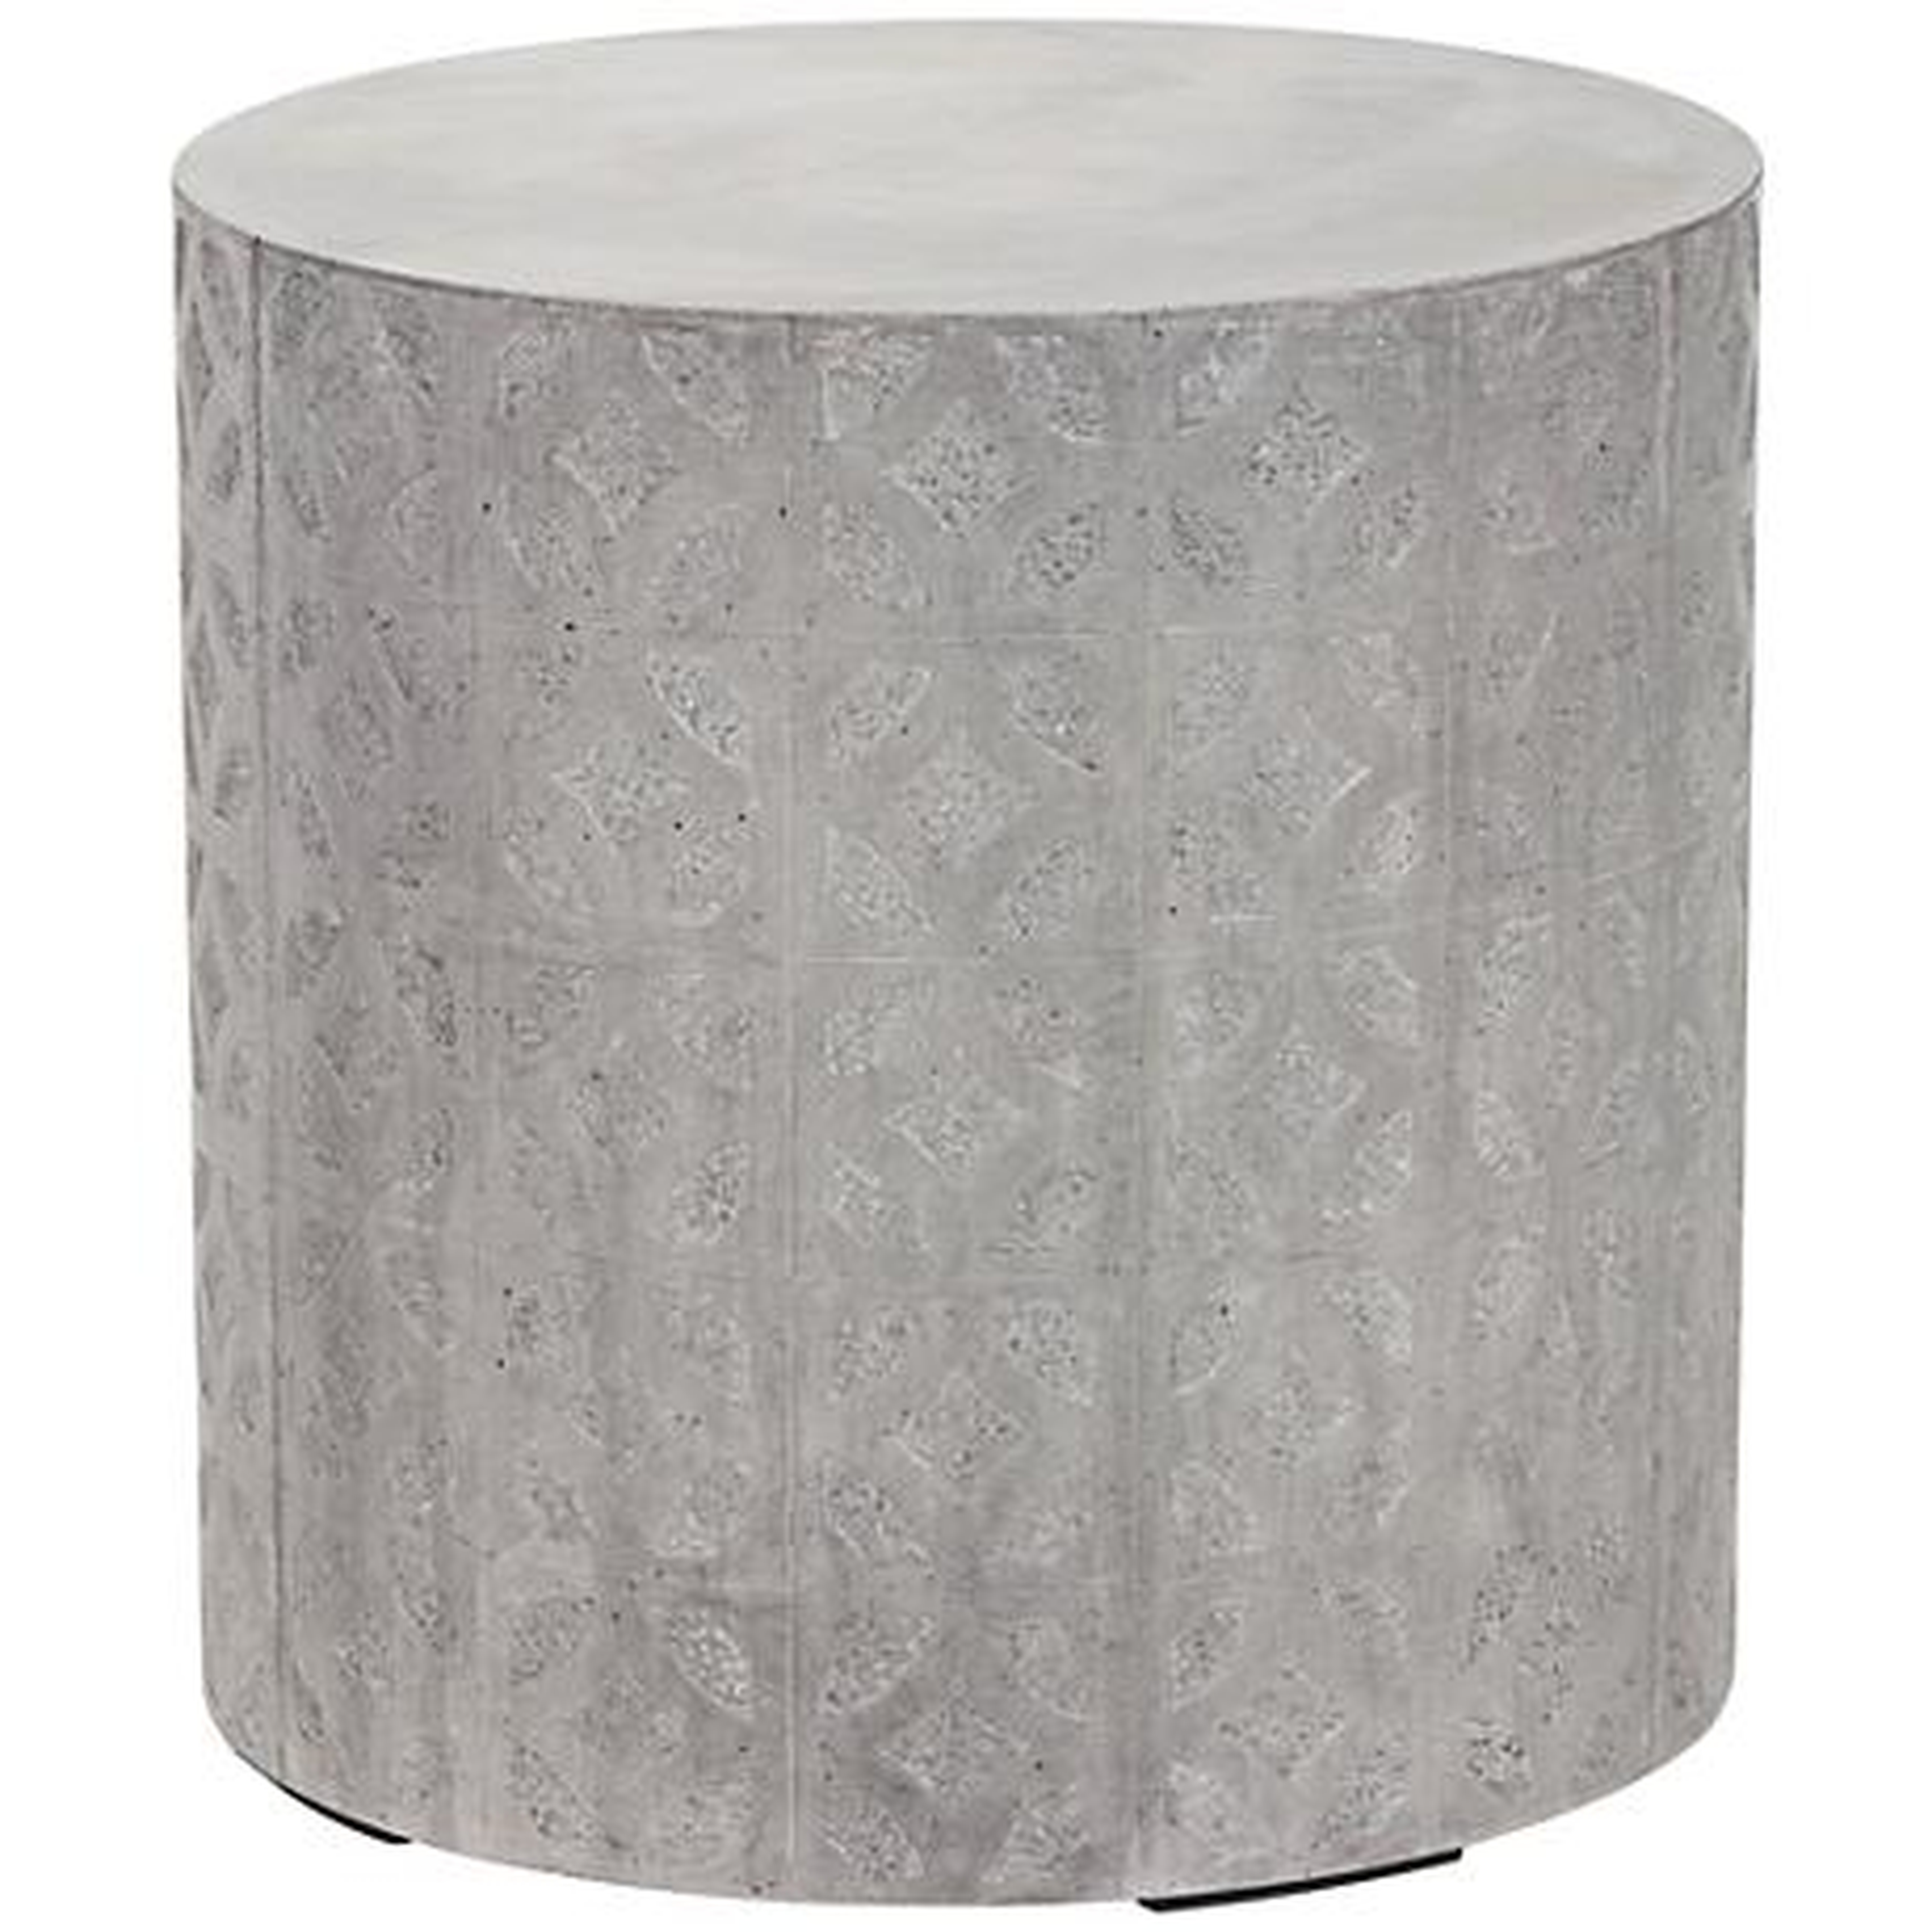 Imani Cement Drum Natural Concrete Indoor-Outdoor Side Table - Lamps Plus